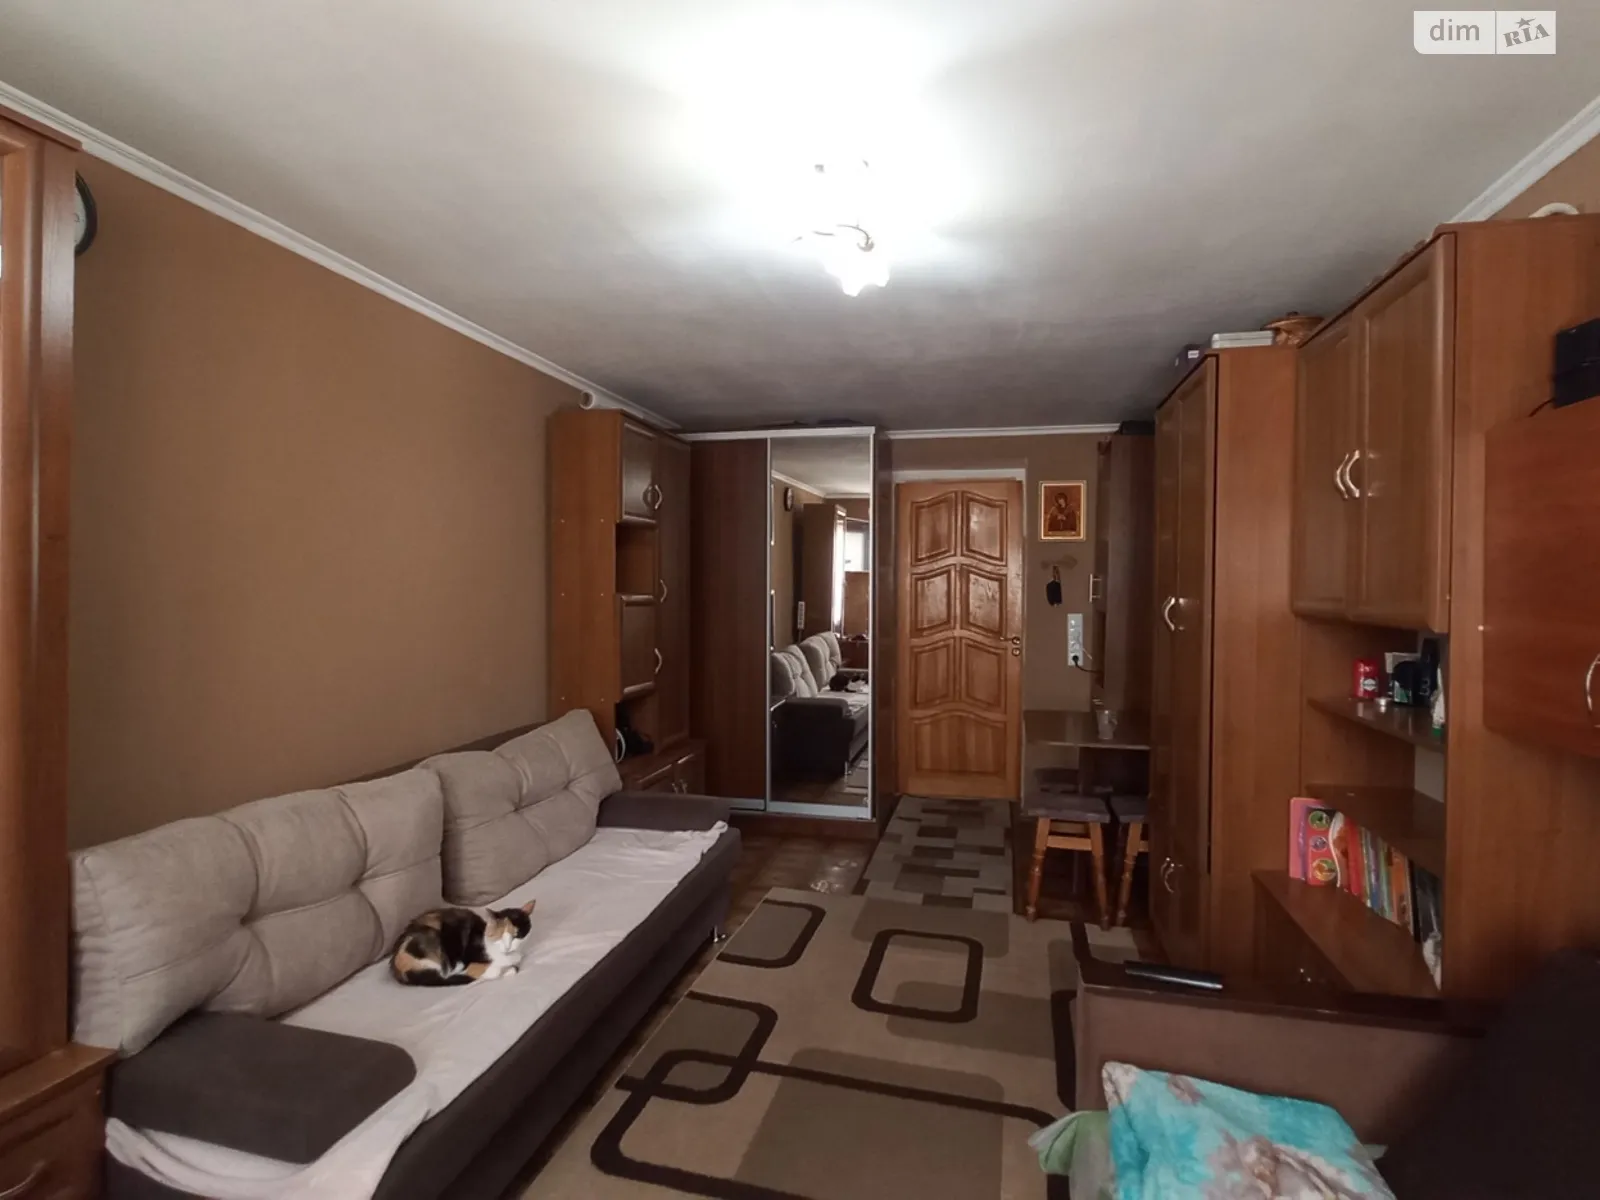 Продается комната 16 кв. м в Ровно - фото 4